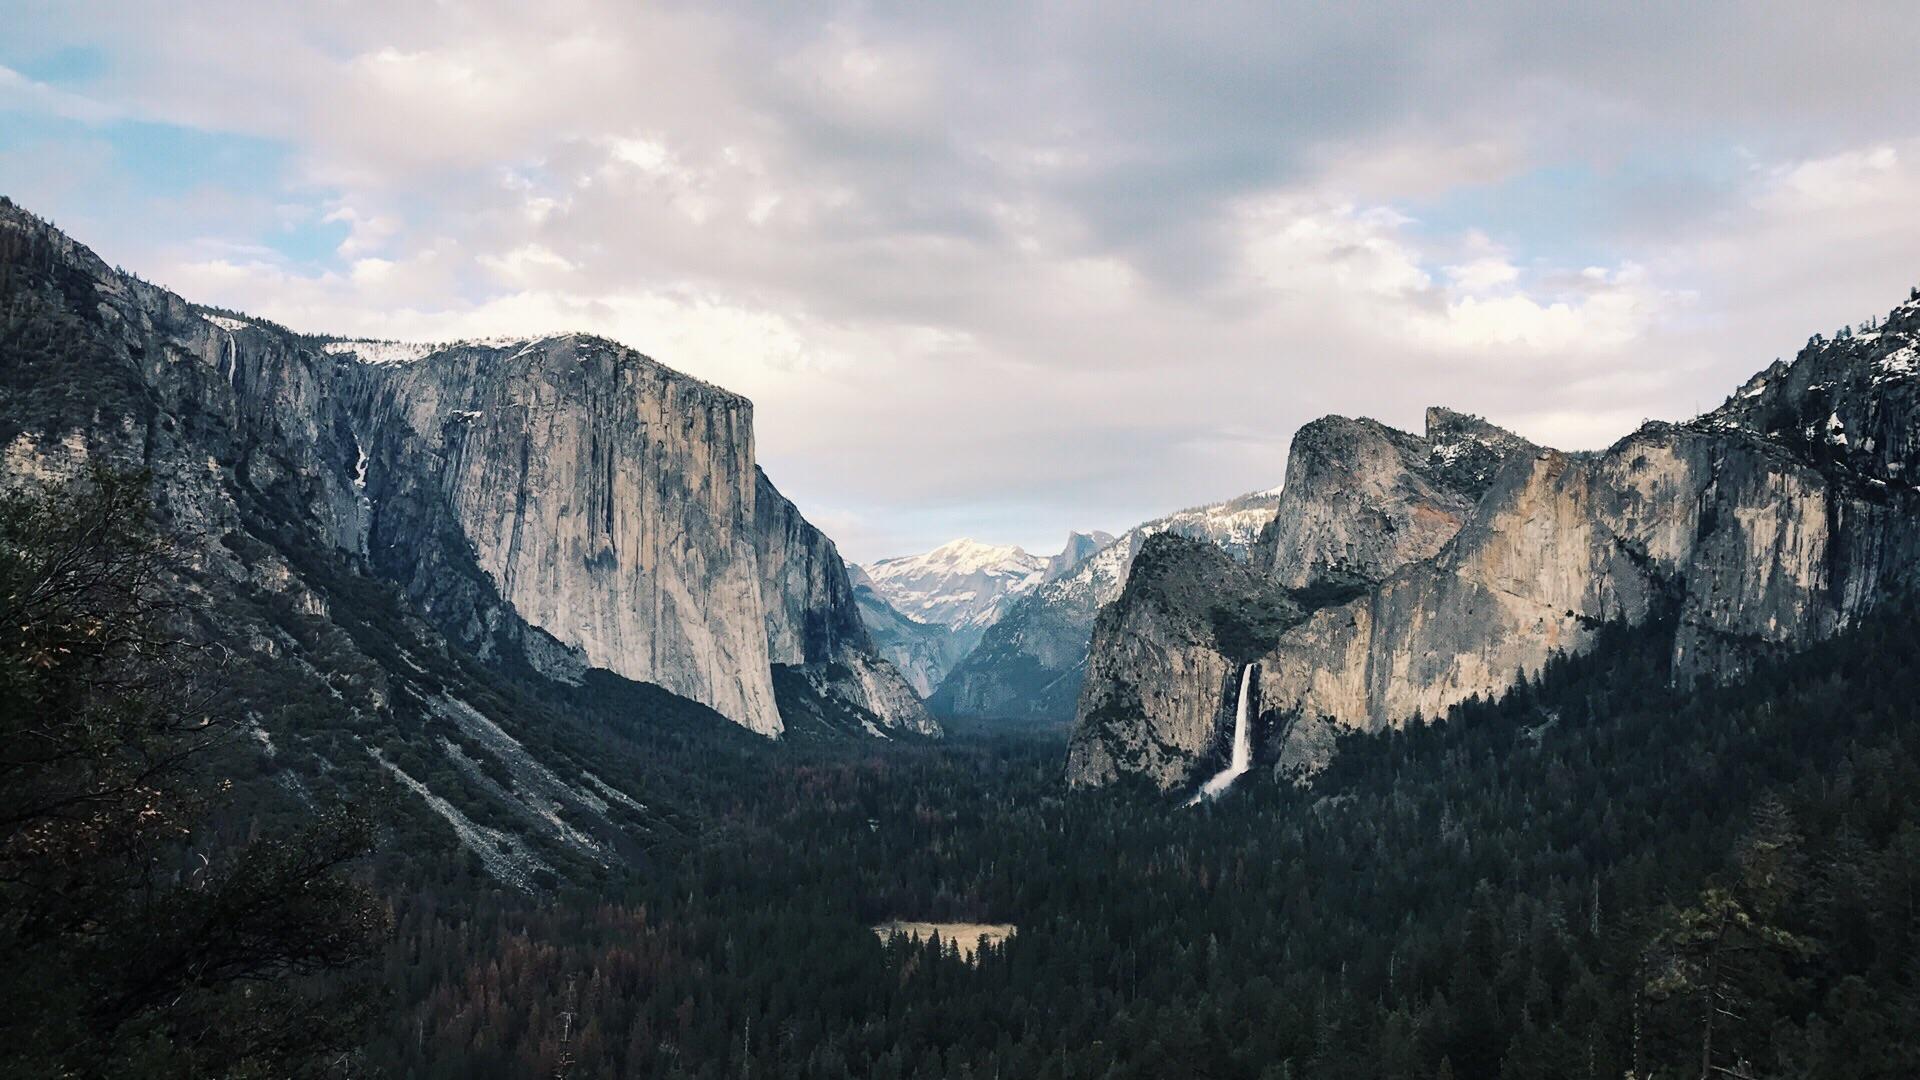 Yosemite National Park El Capitan Bridalveil Fall And Half Dome In